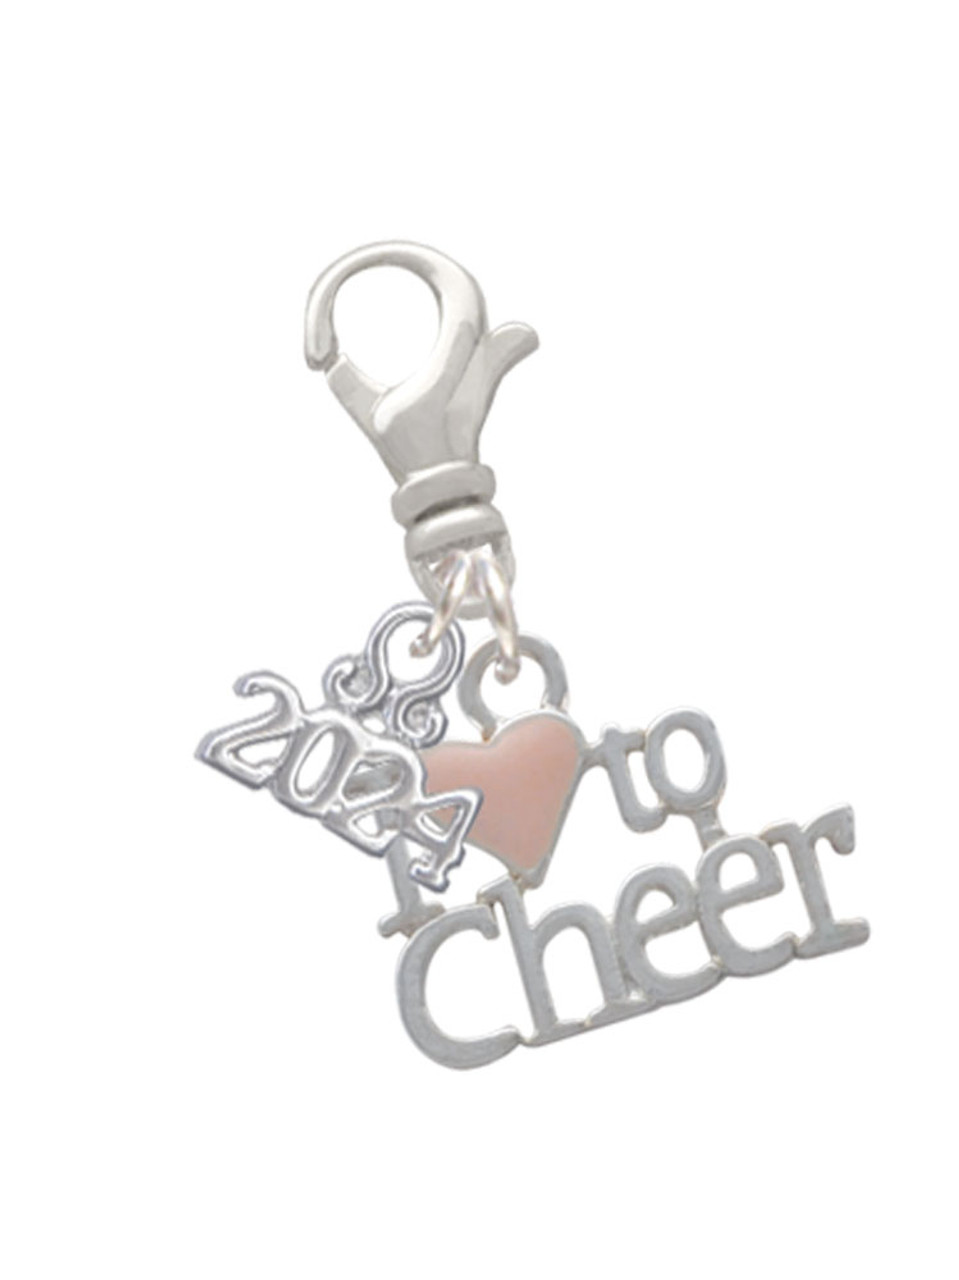 Cheer Heart Charm